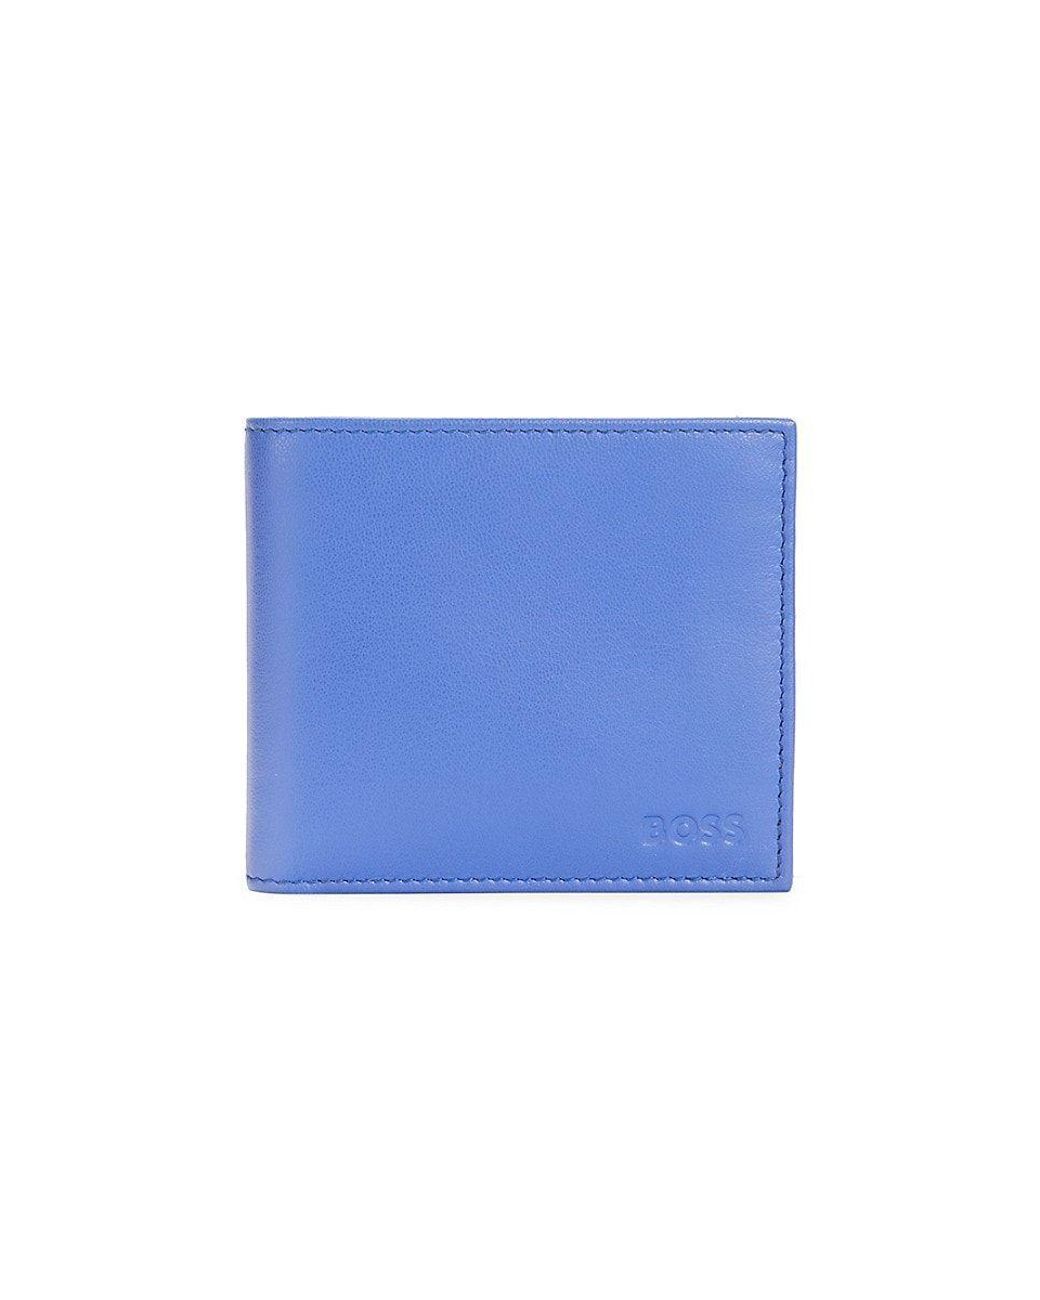 Hugo Boss Men's Asolo Wallet, 12 x 9.5 x 1.5 cm : Amazon.de: Fashion